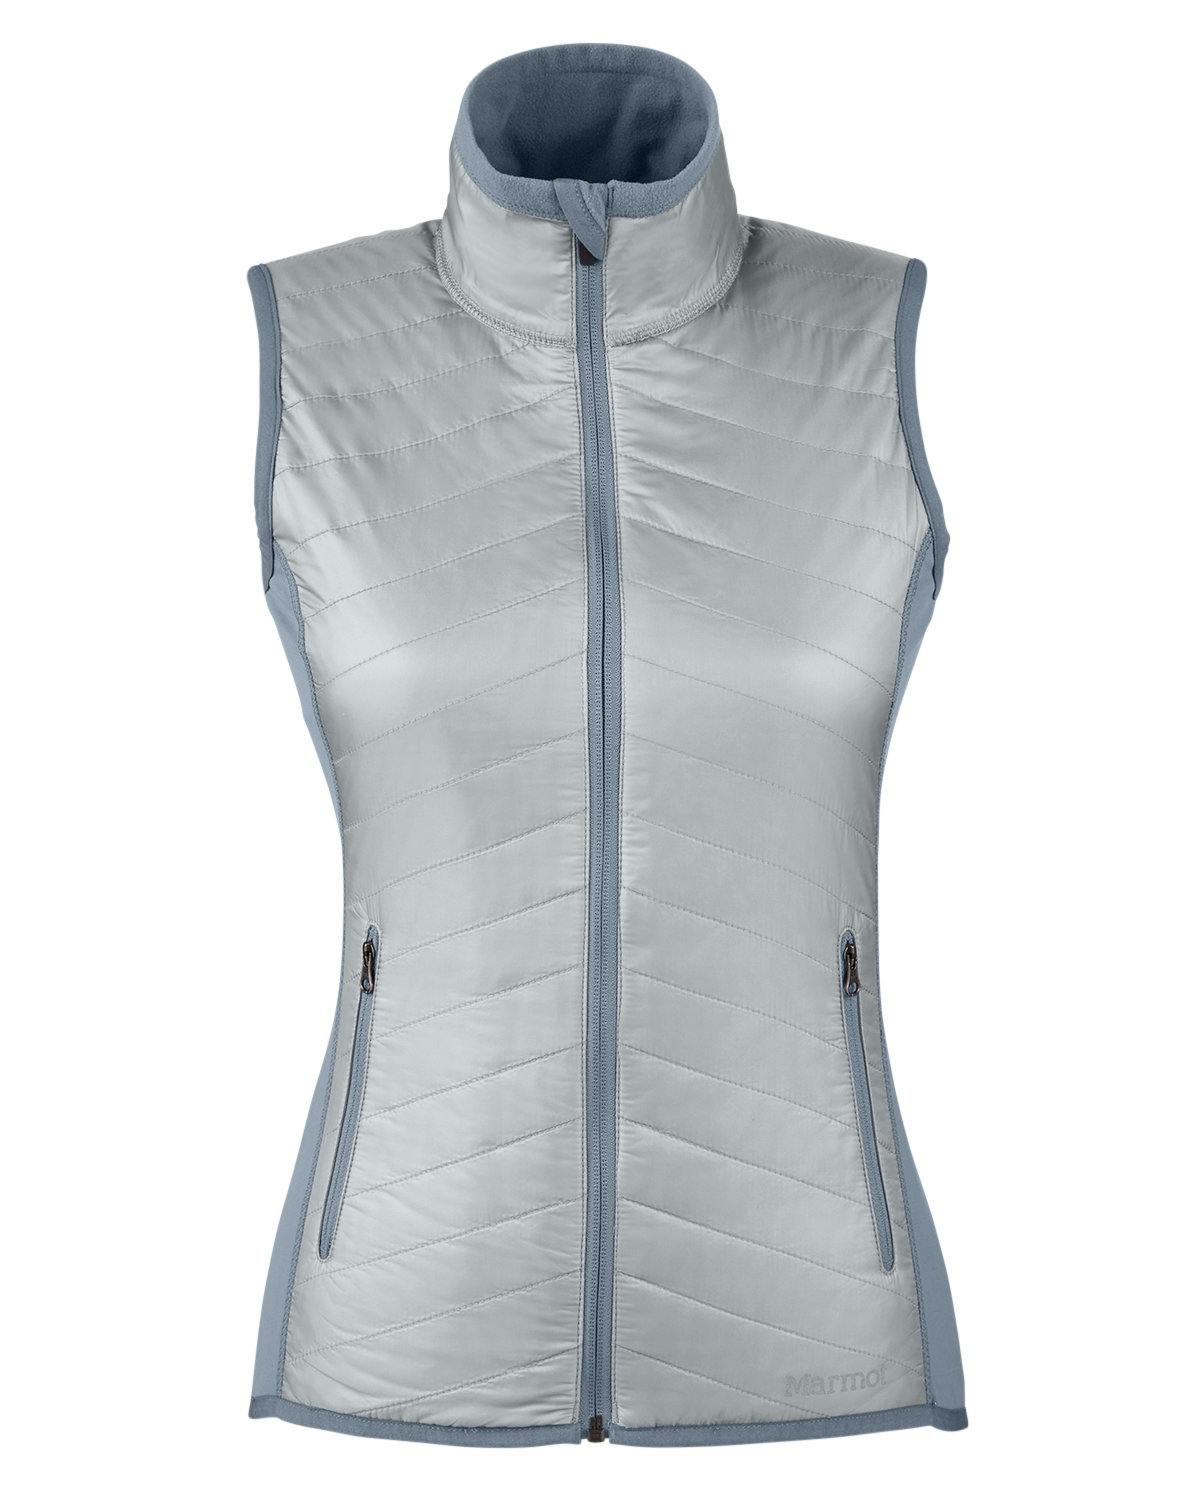 Image for Ladies' Variant Vest